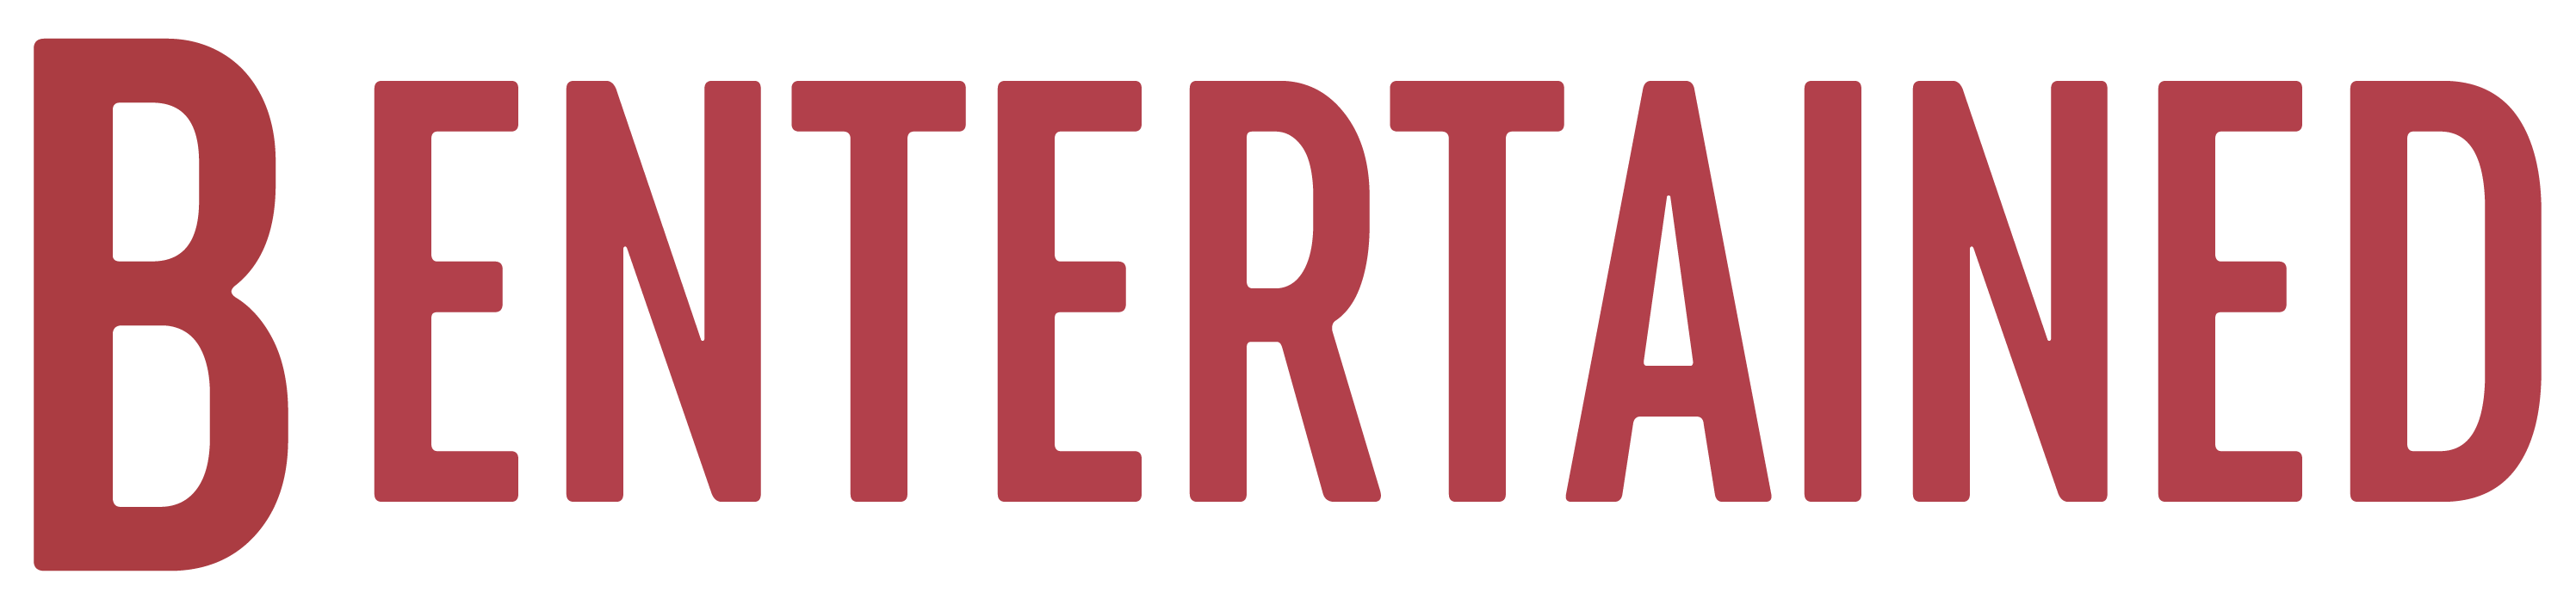 Bentertained Logo